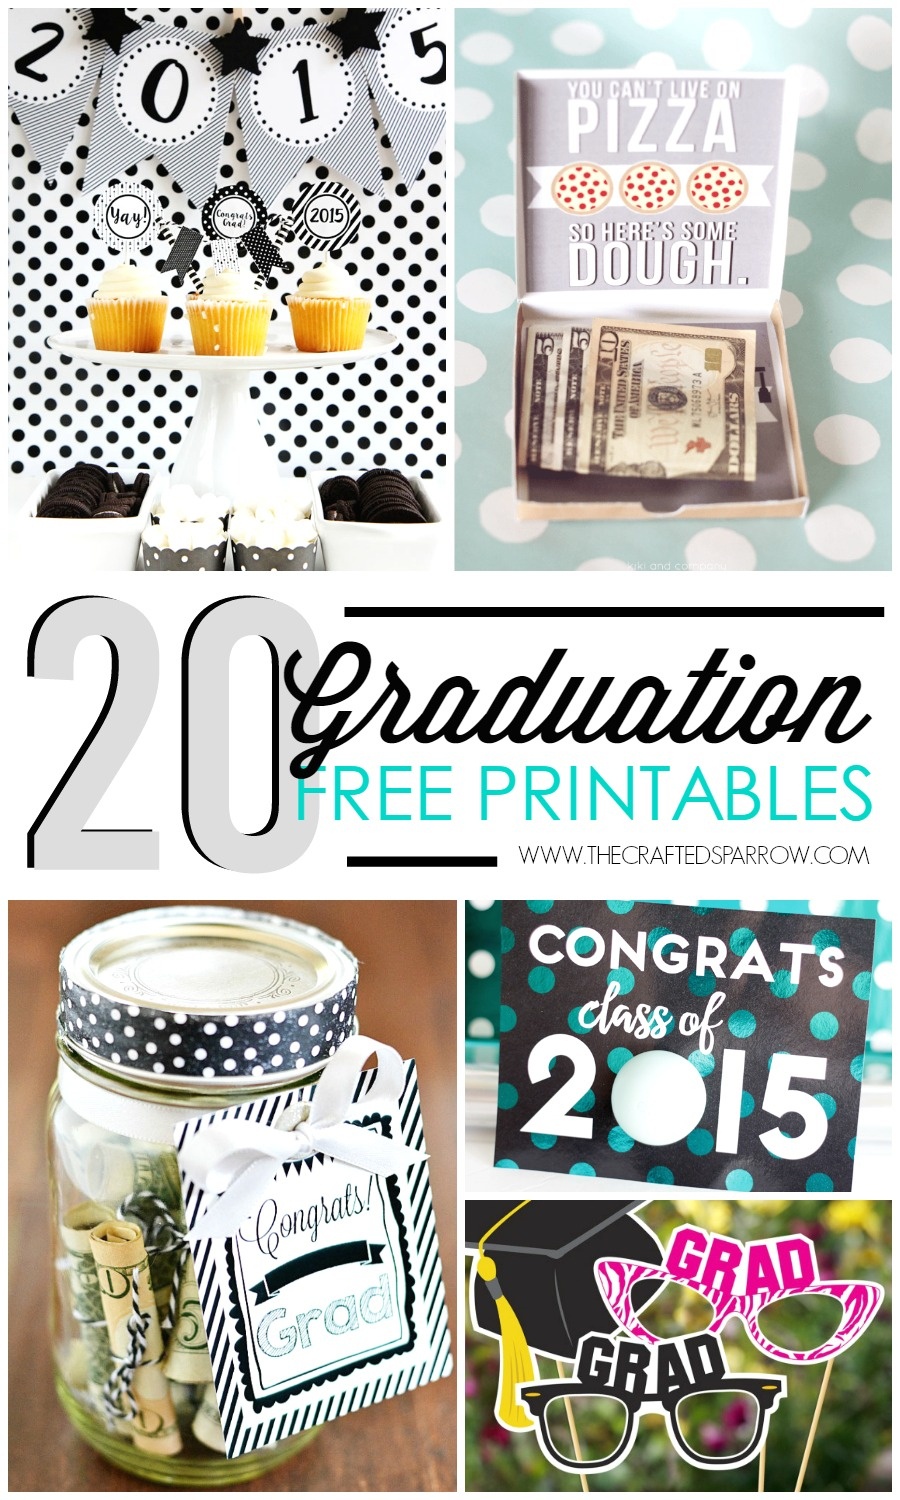 20 Graduation Printables - Free Graduation Printables